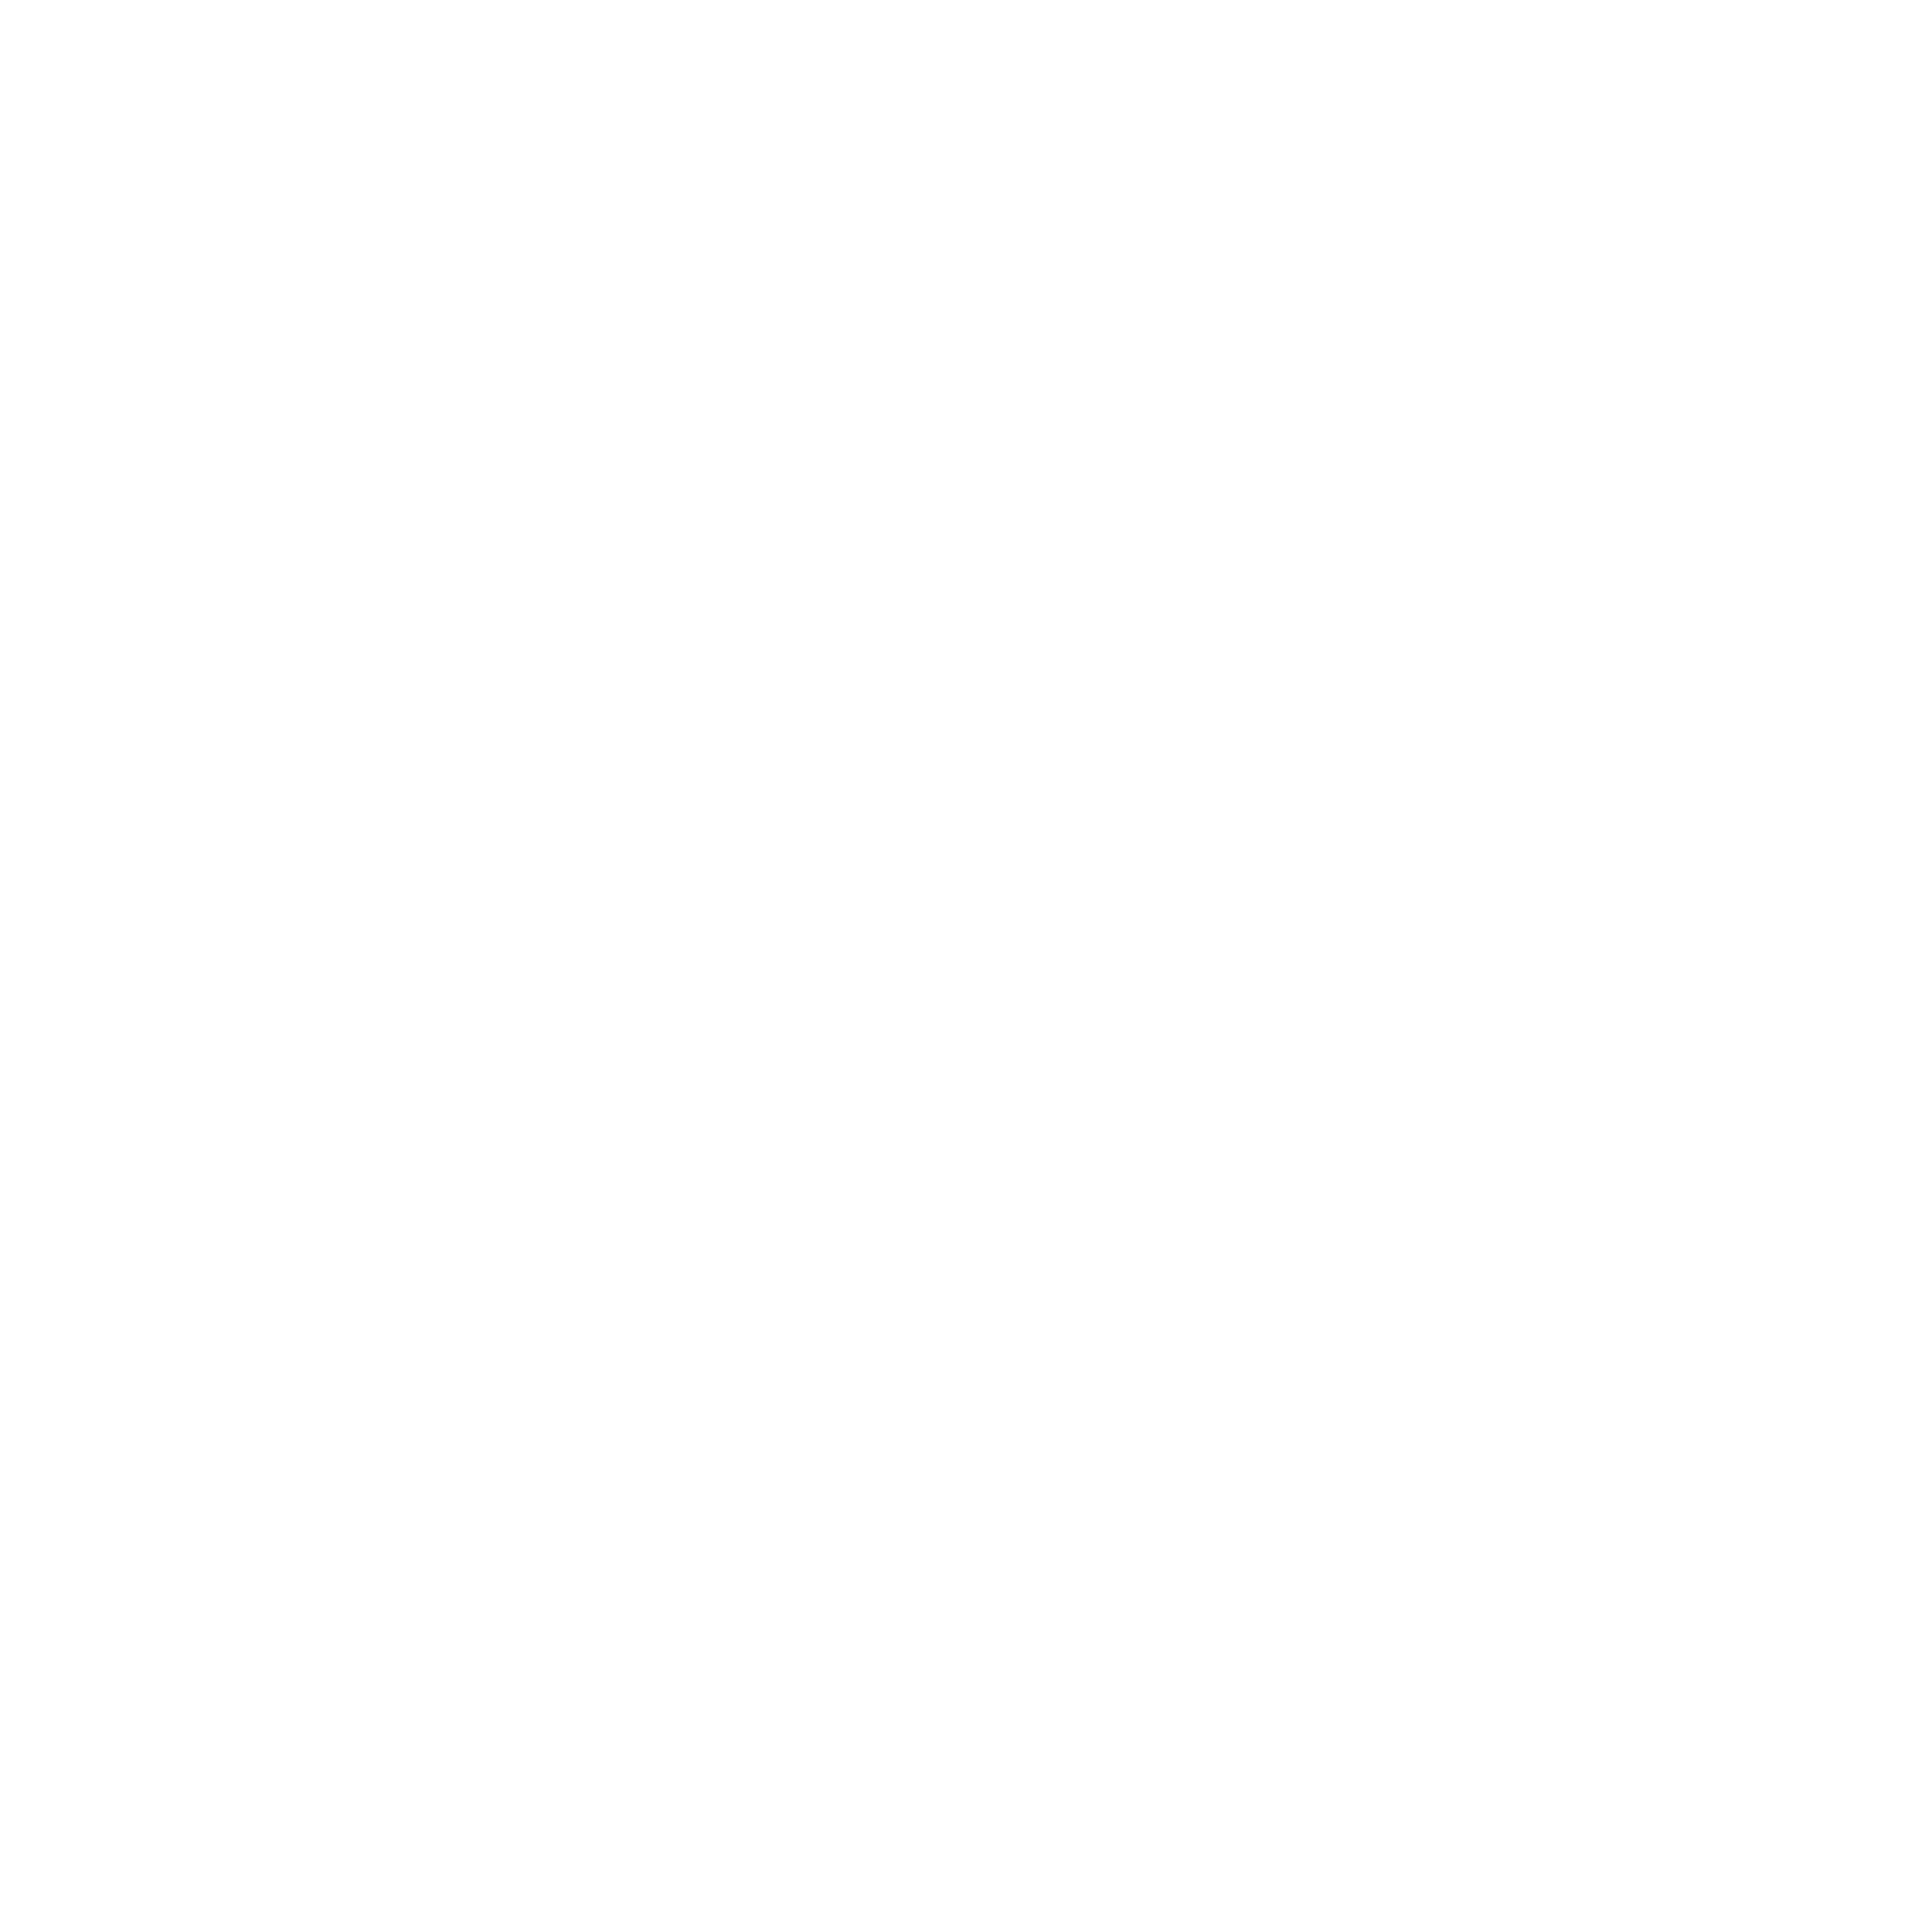 Alrajhi First Industrial